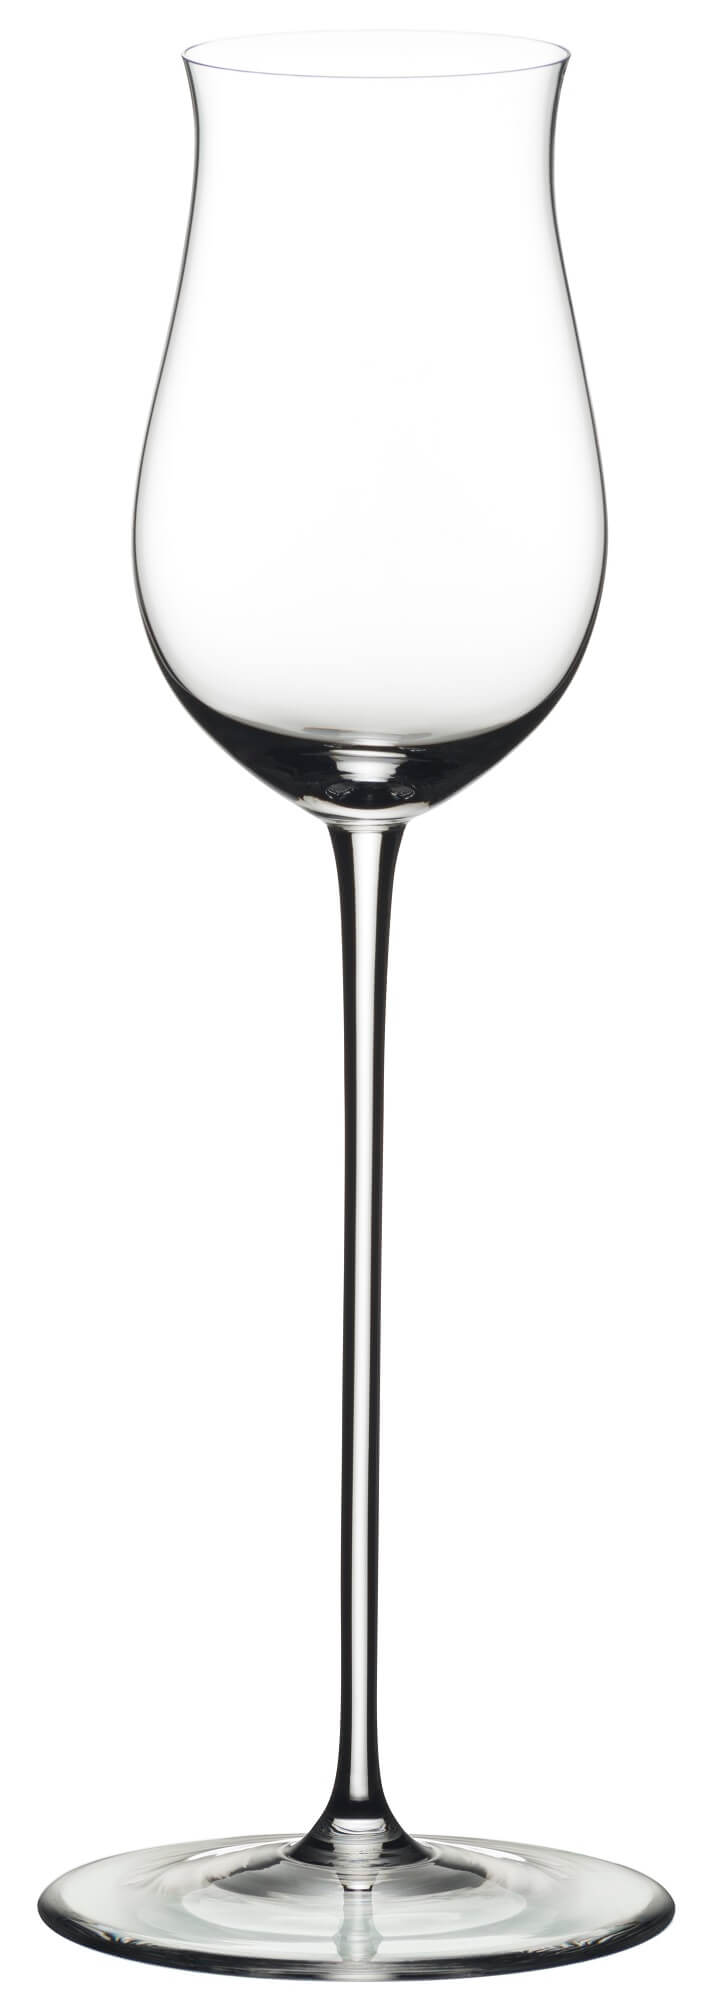 Spirit glass Veritas, Riedel - 152ml (2 pcs.)